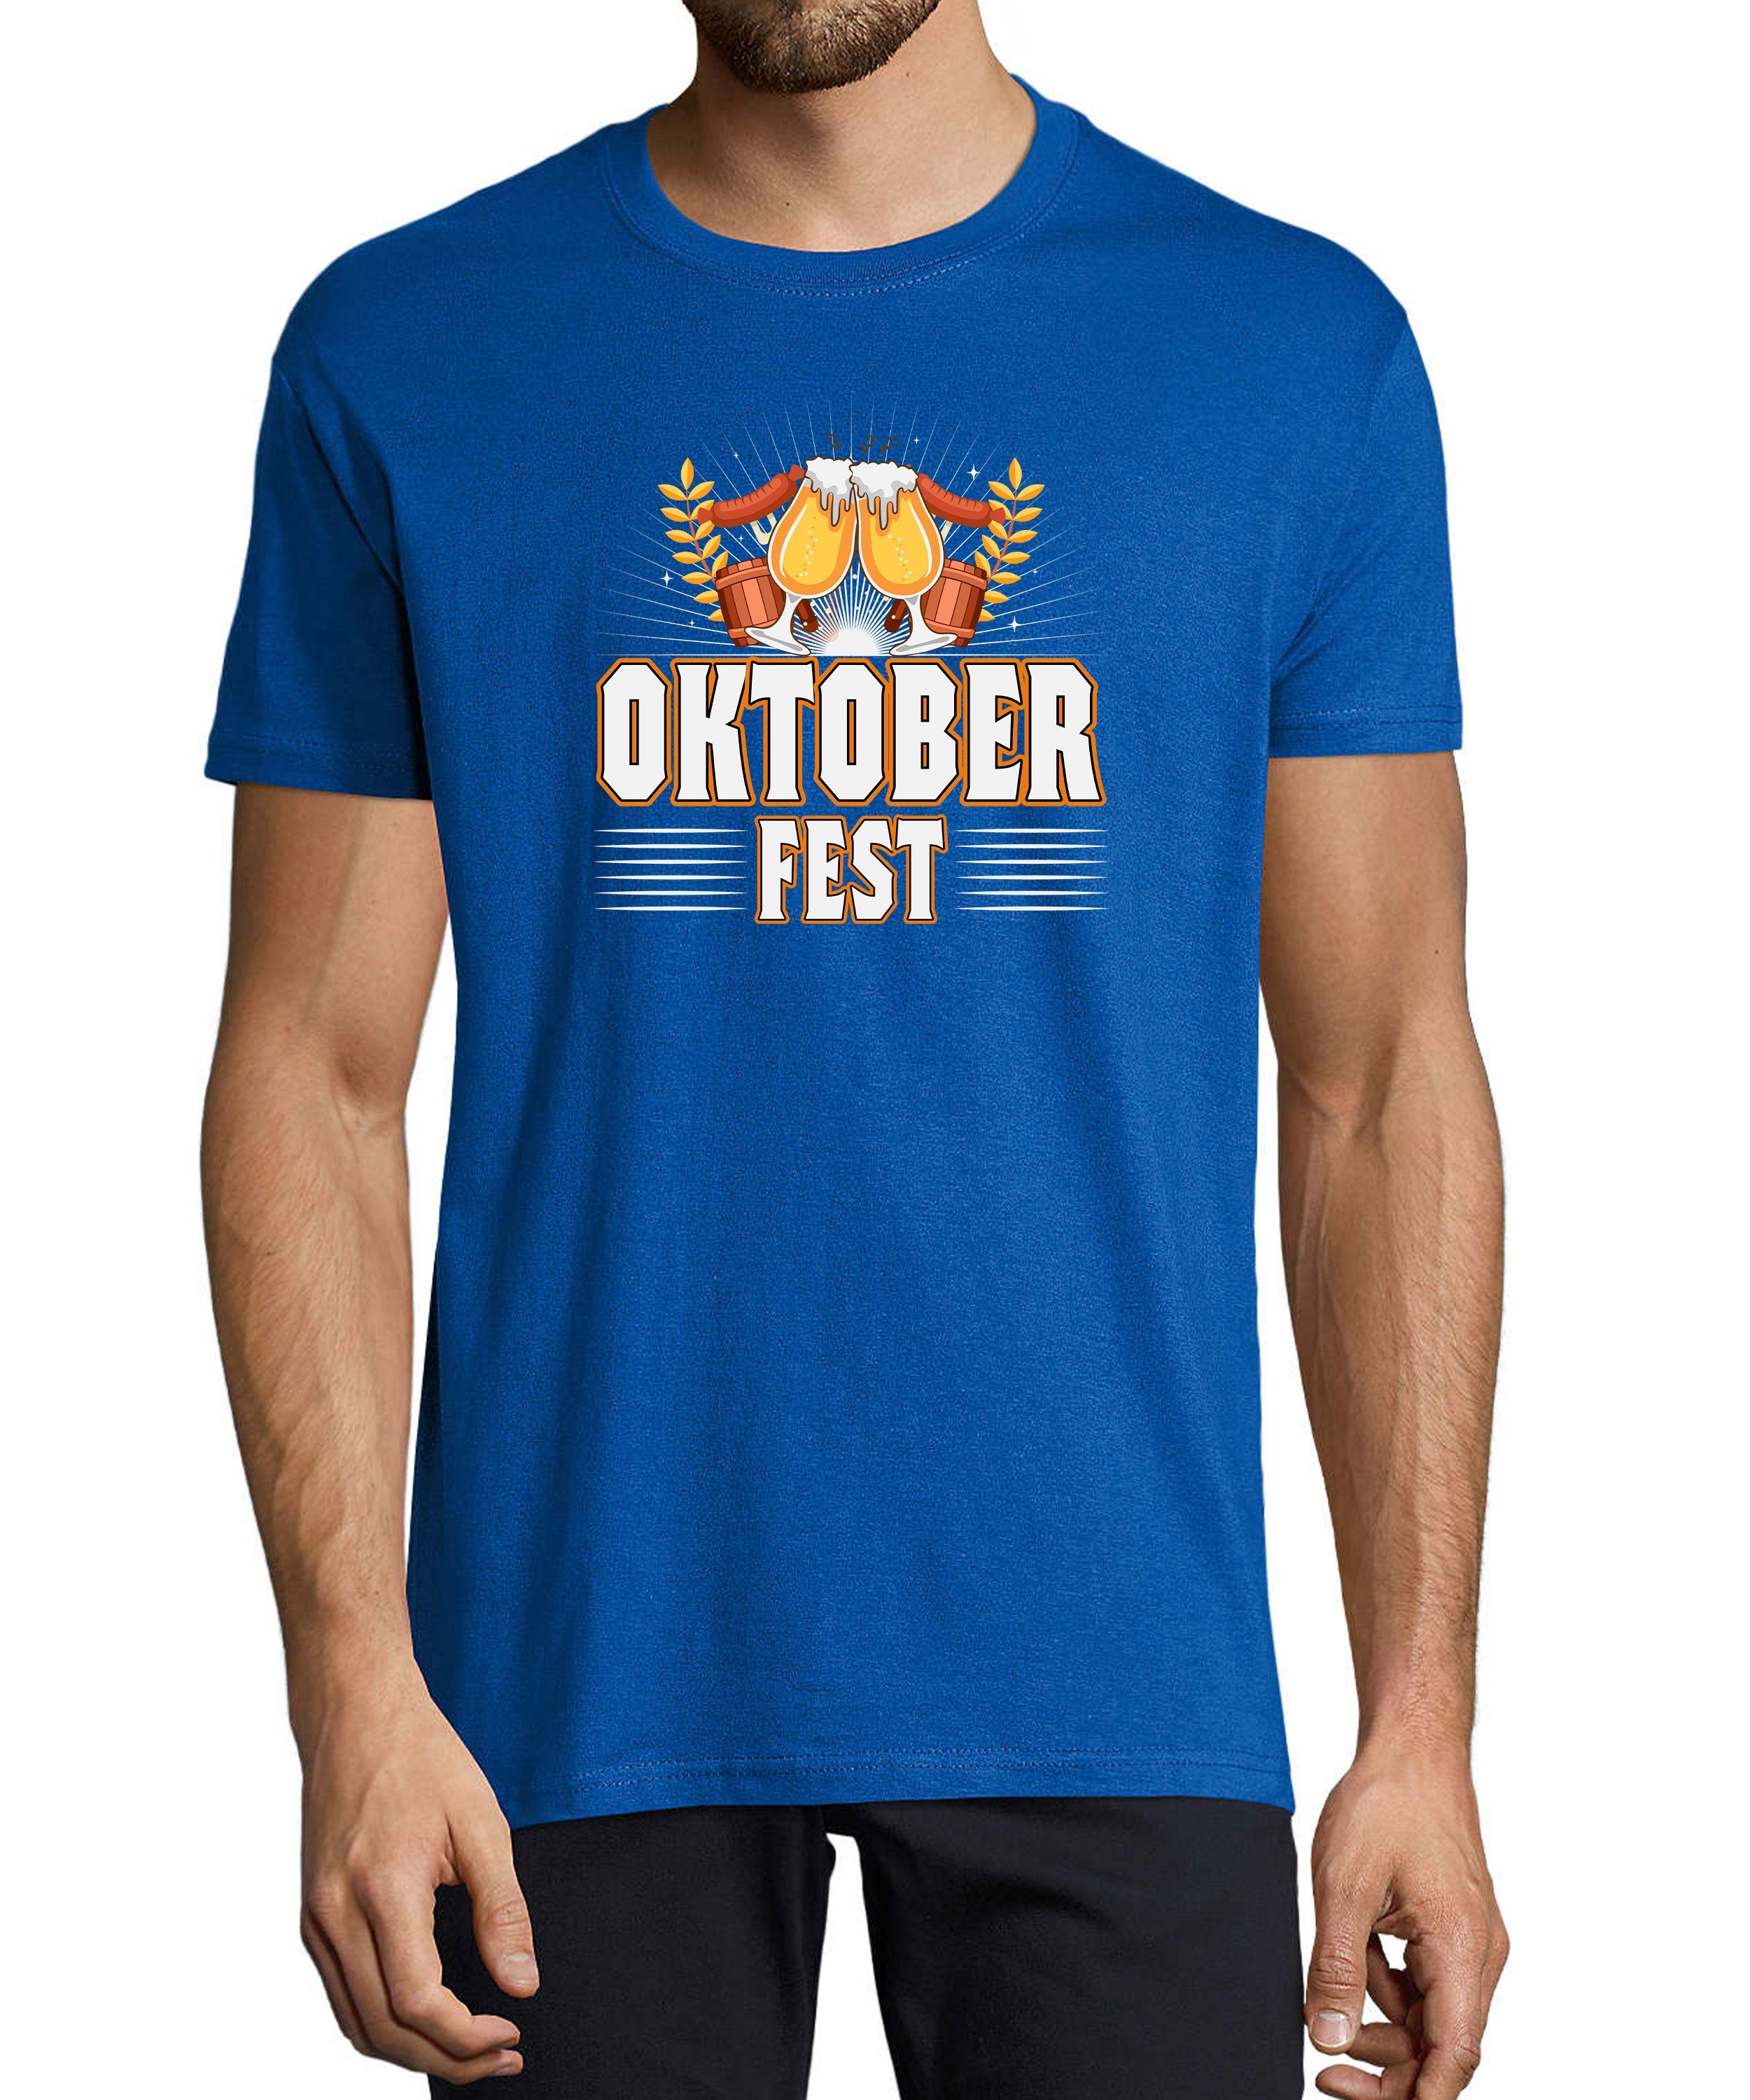 - MyDesign24 mit Fit, T-Shirt i327 Oktoberfest Aufdruck T-Shirt Herren royal Baumwollshirt Shirt blau Party Regular